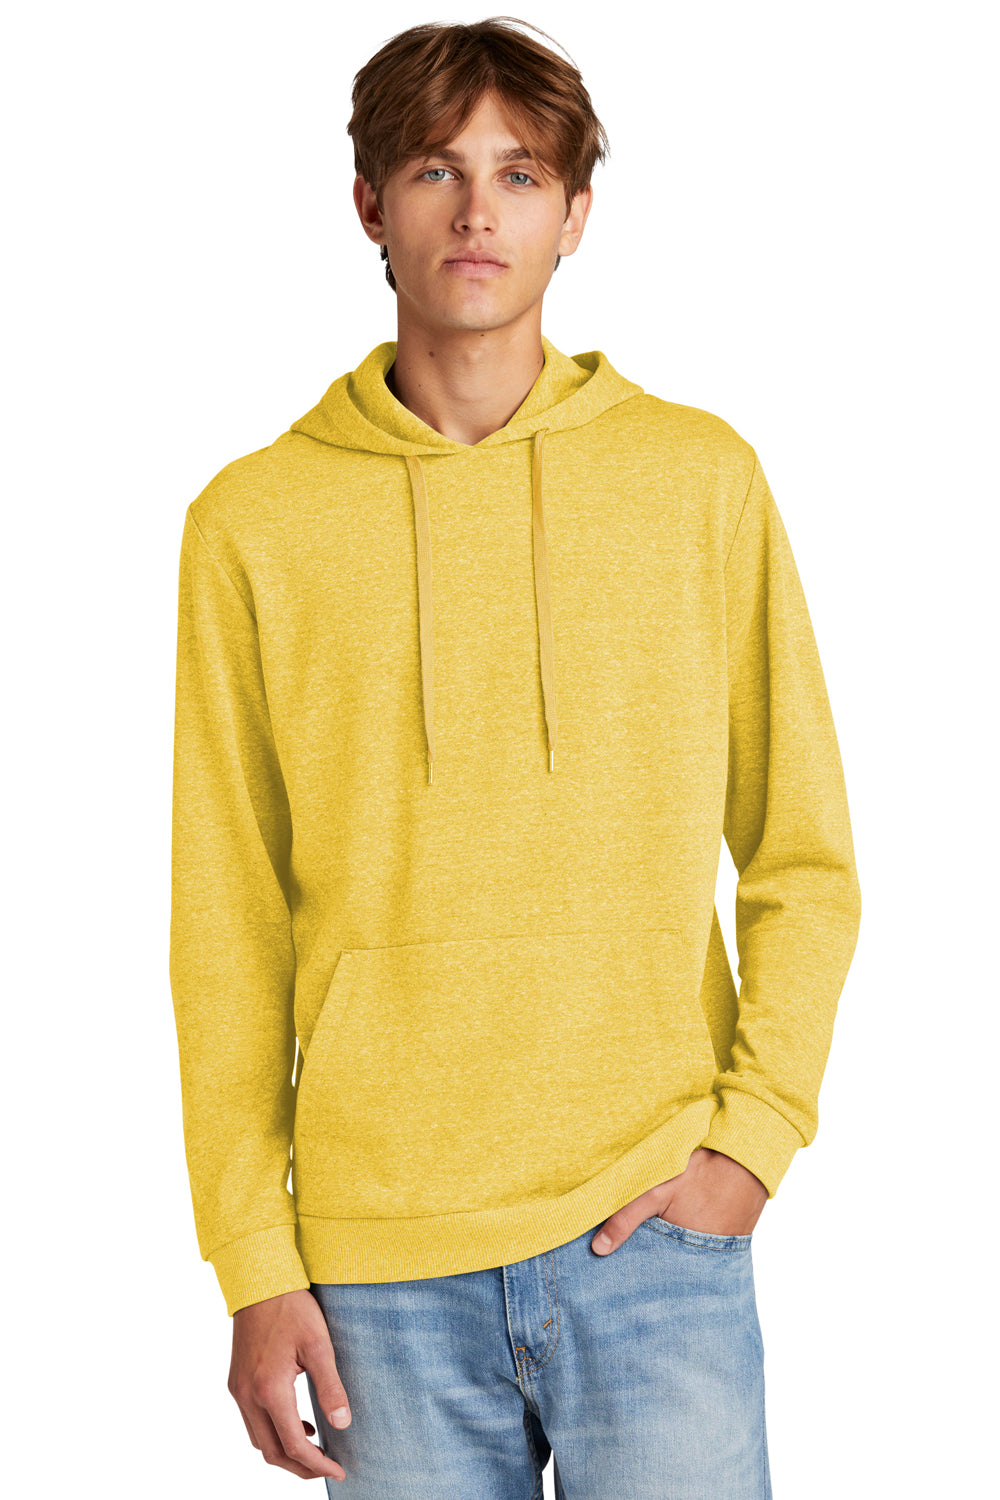 District DT1300 Mens Perfect Tri Fleece Hooded Sweatshirt Hoodie Heather Ochre Yellow Front